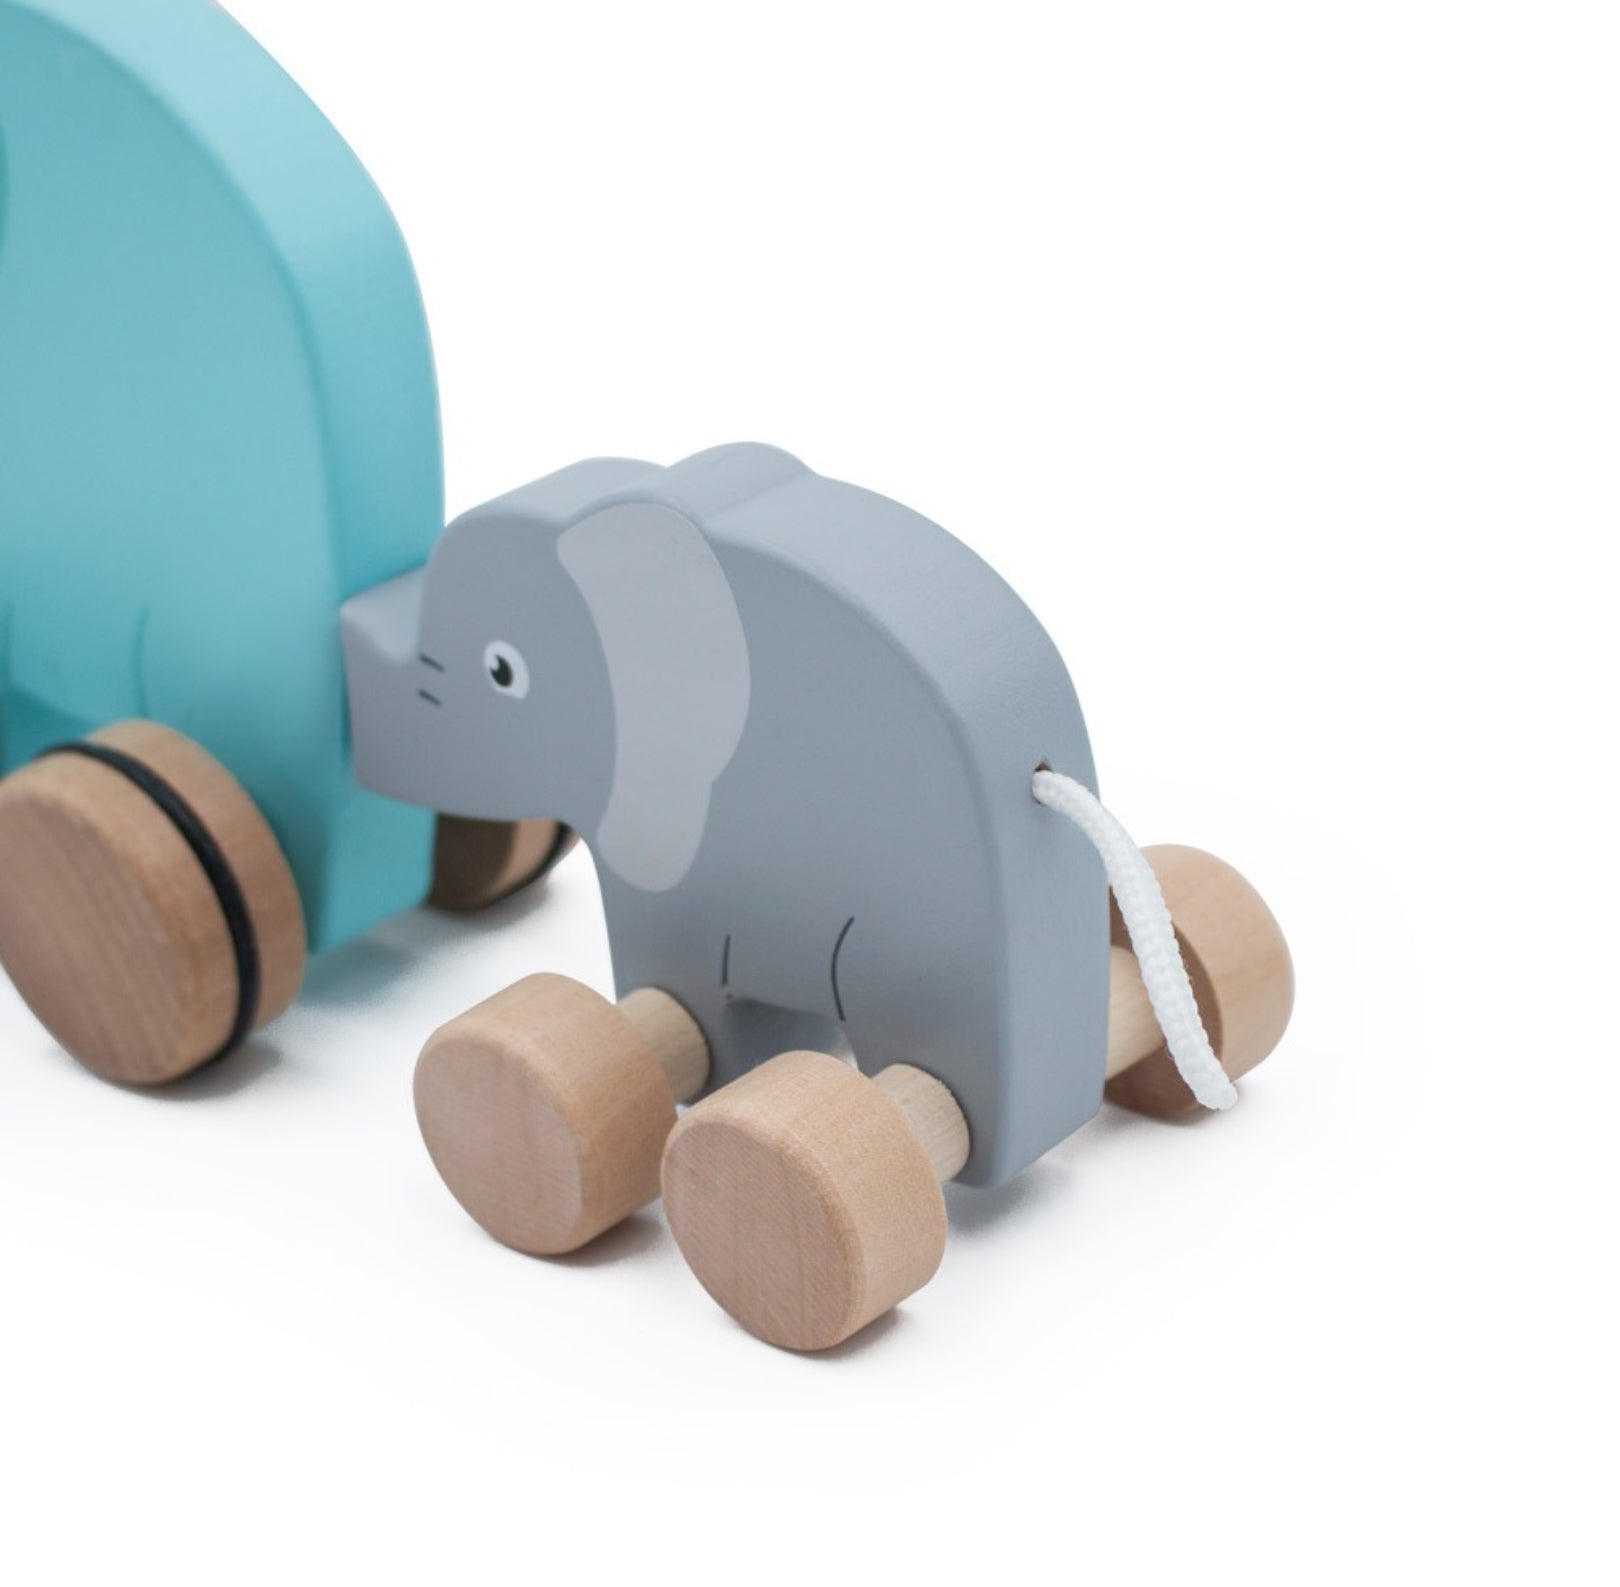 Jumini Wooden Pull Along Elephants Safari Collection Toy